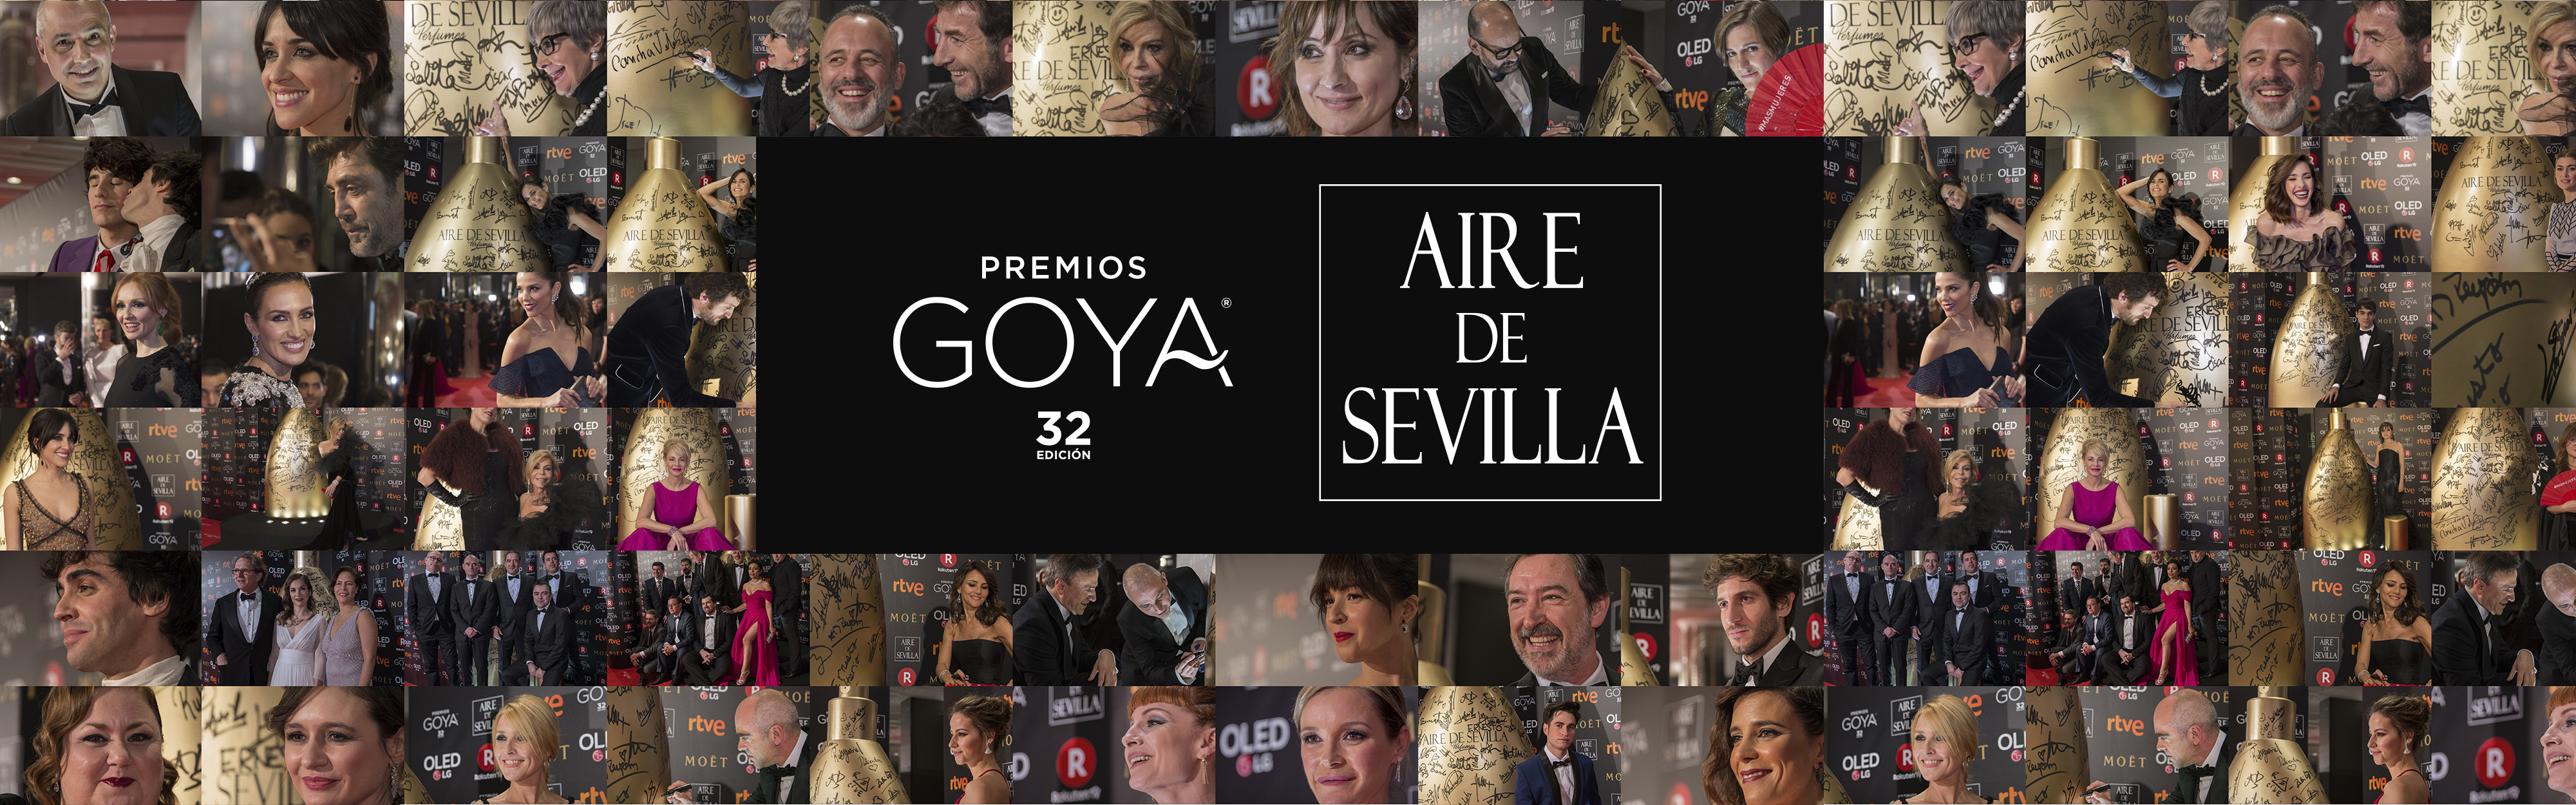 Perfumes Aire de Sevilla - Premiso Goya